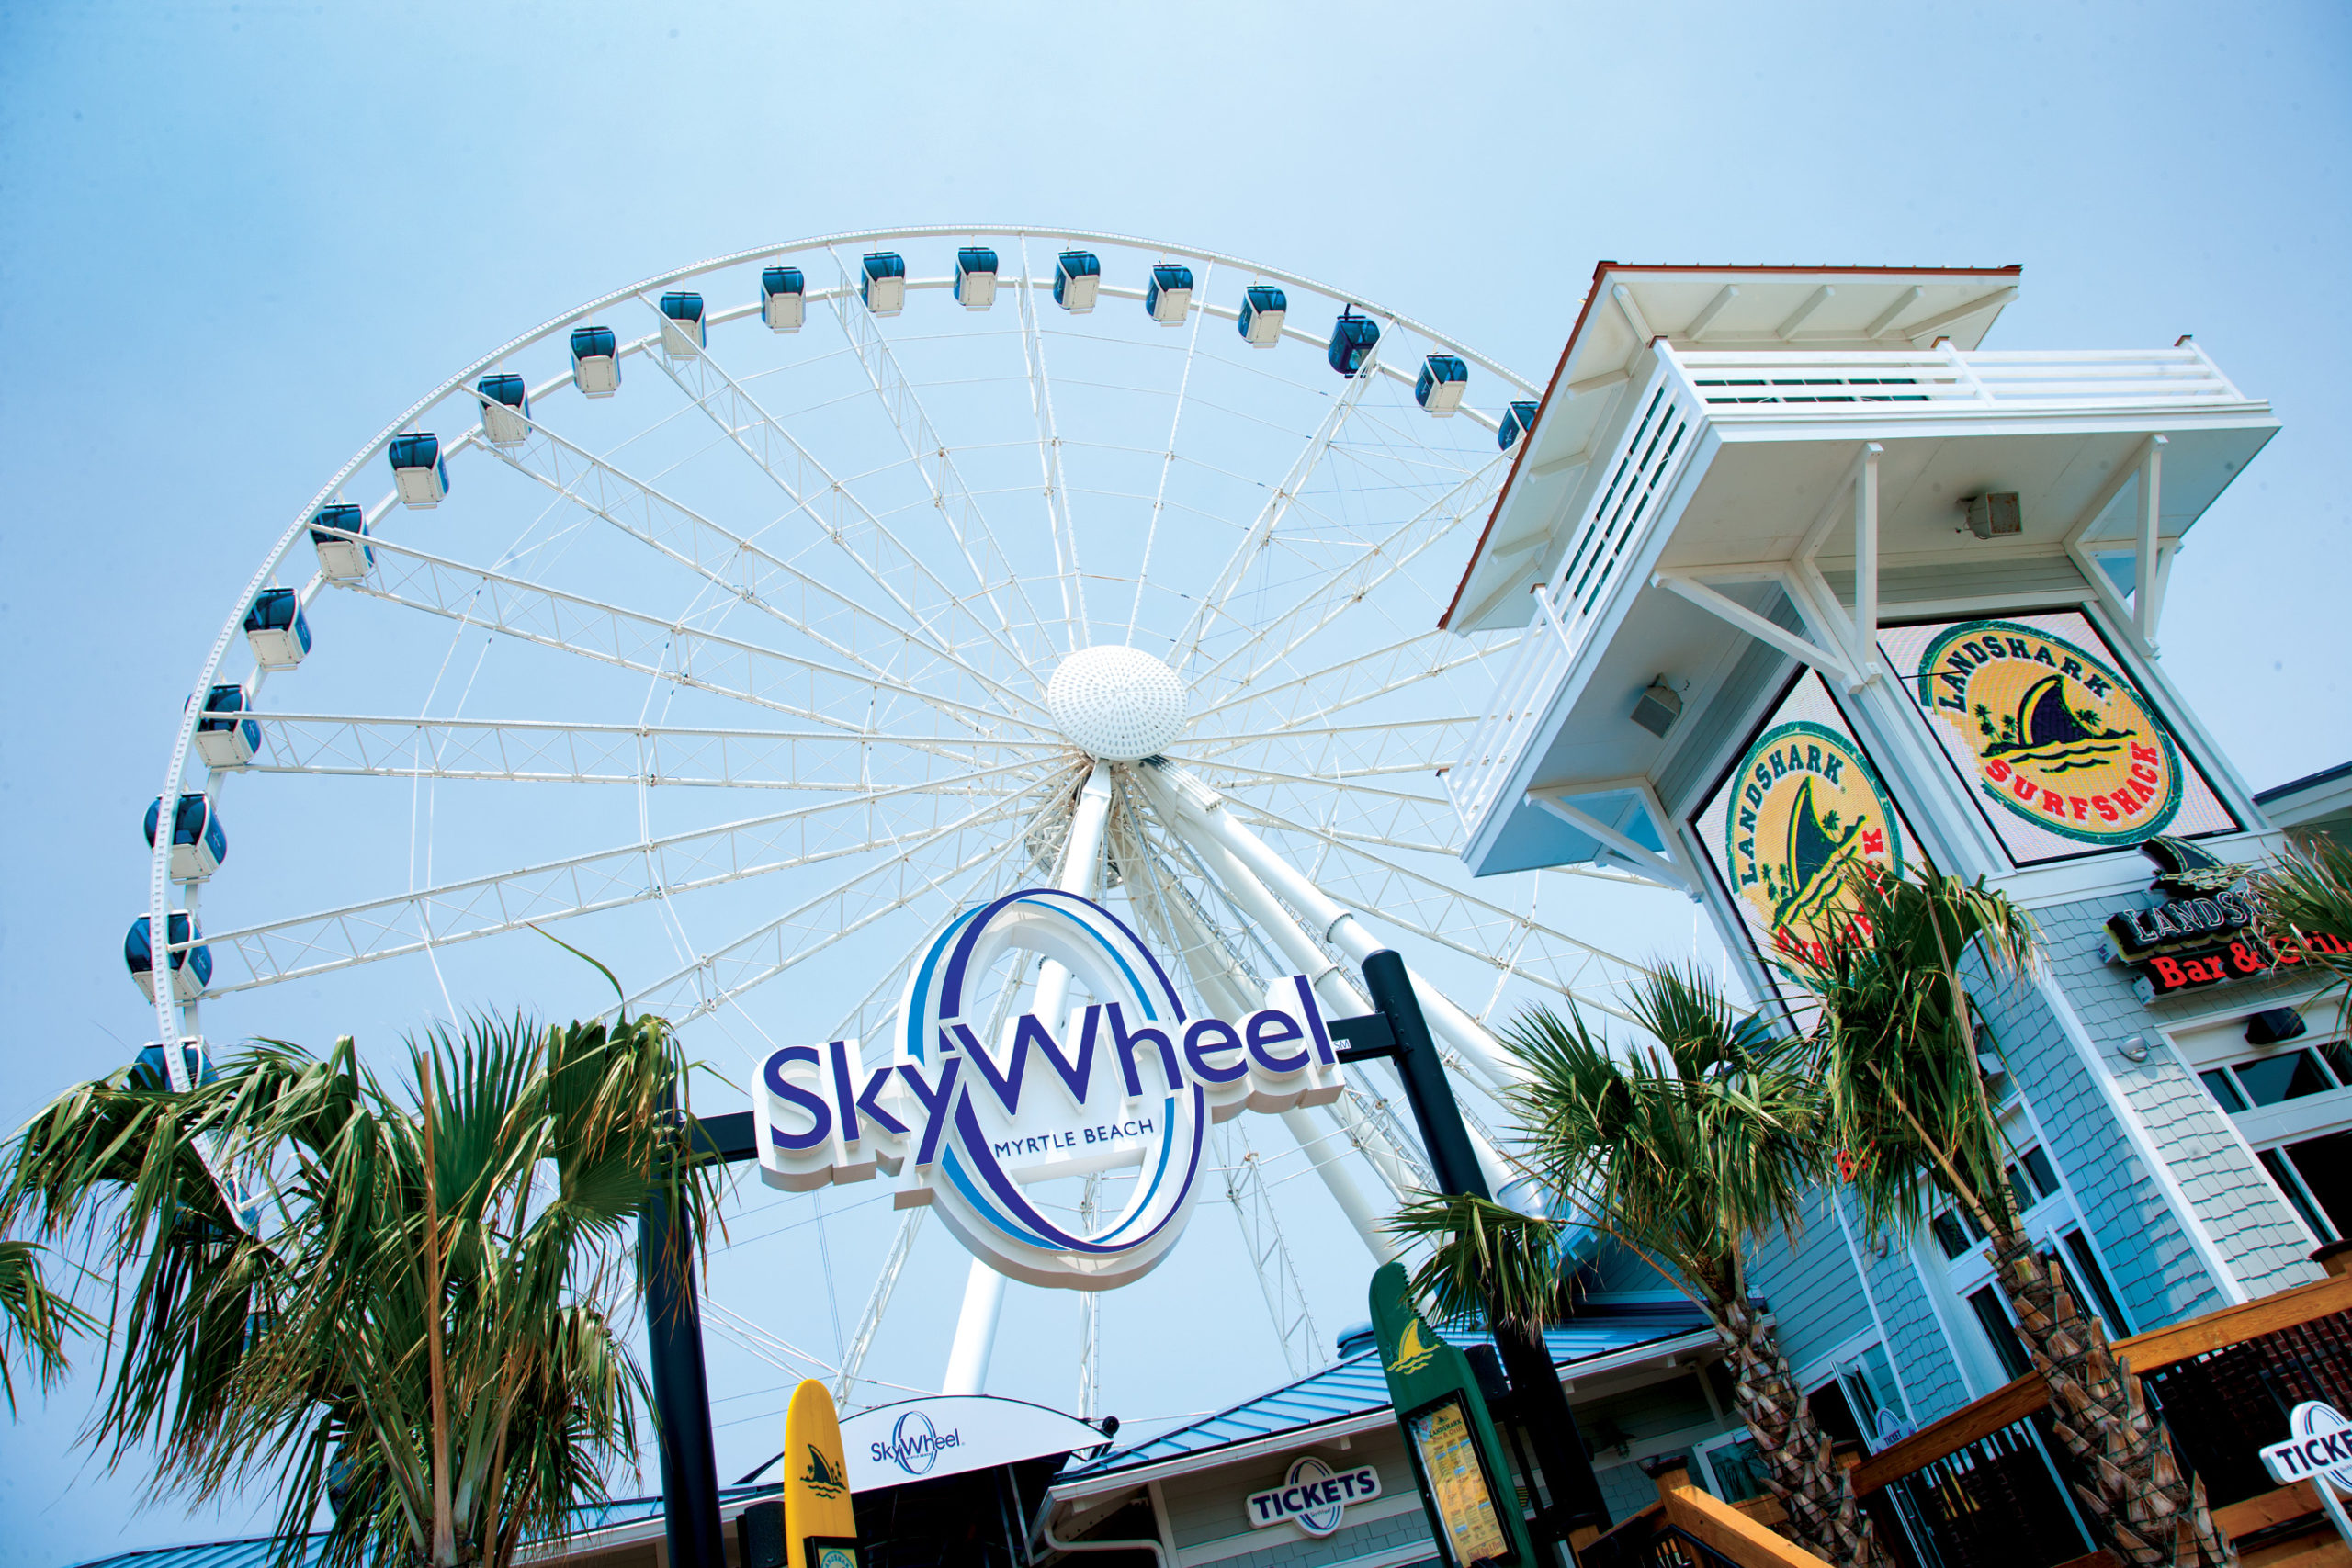 Myrtle-Beach-Skywheel-2012-scaled.jpg